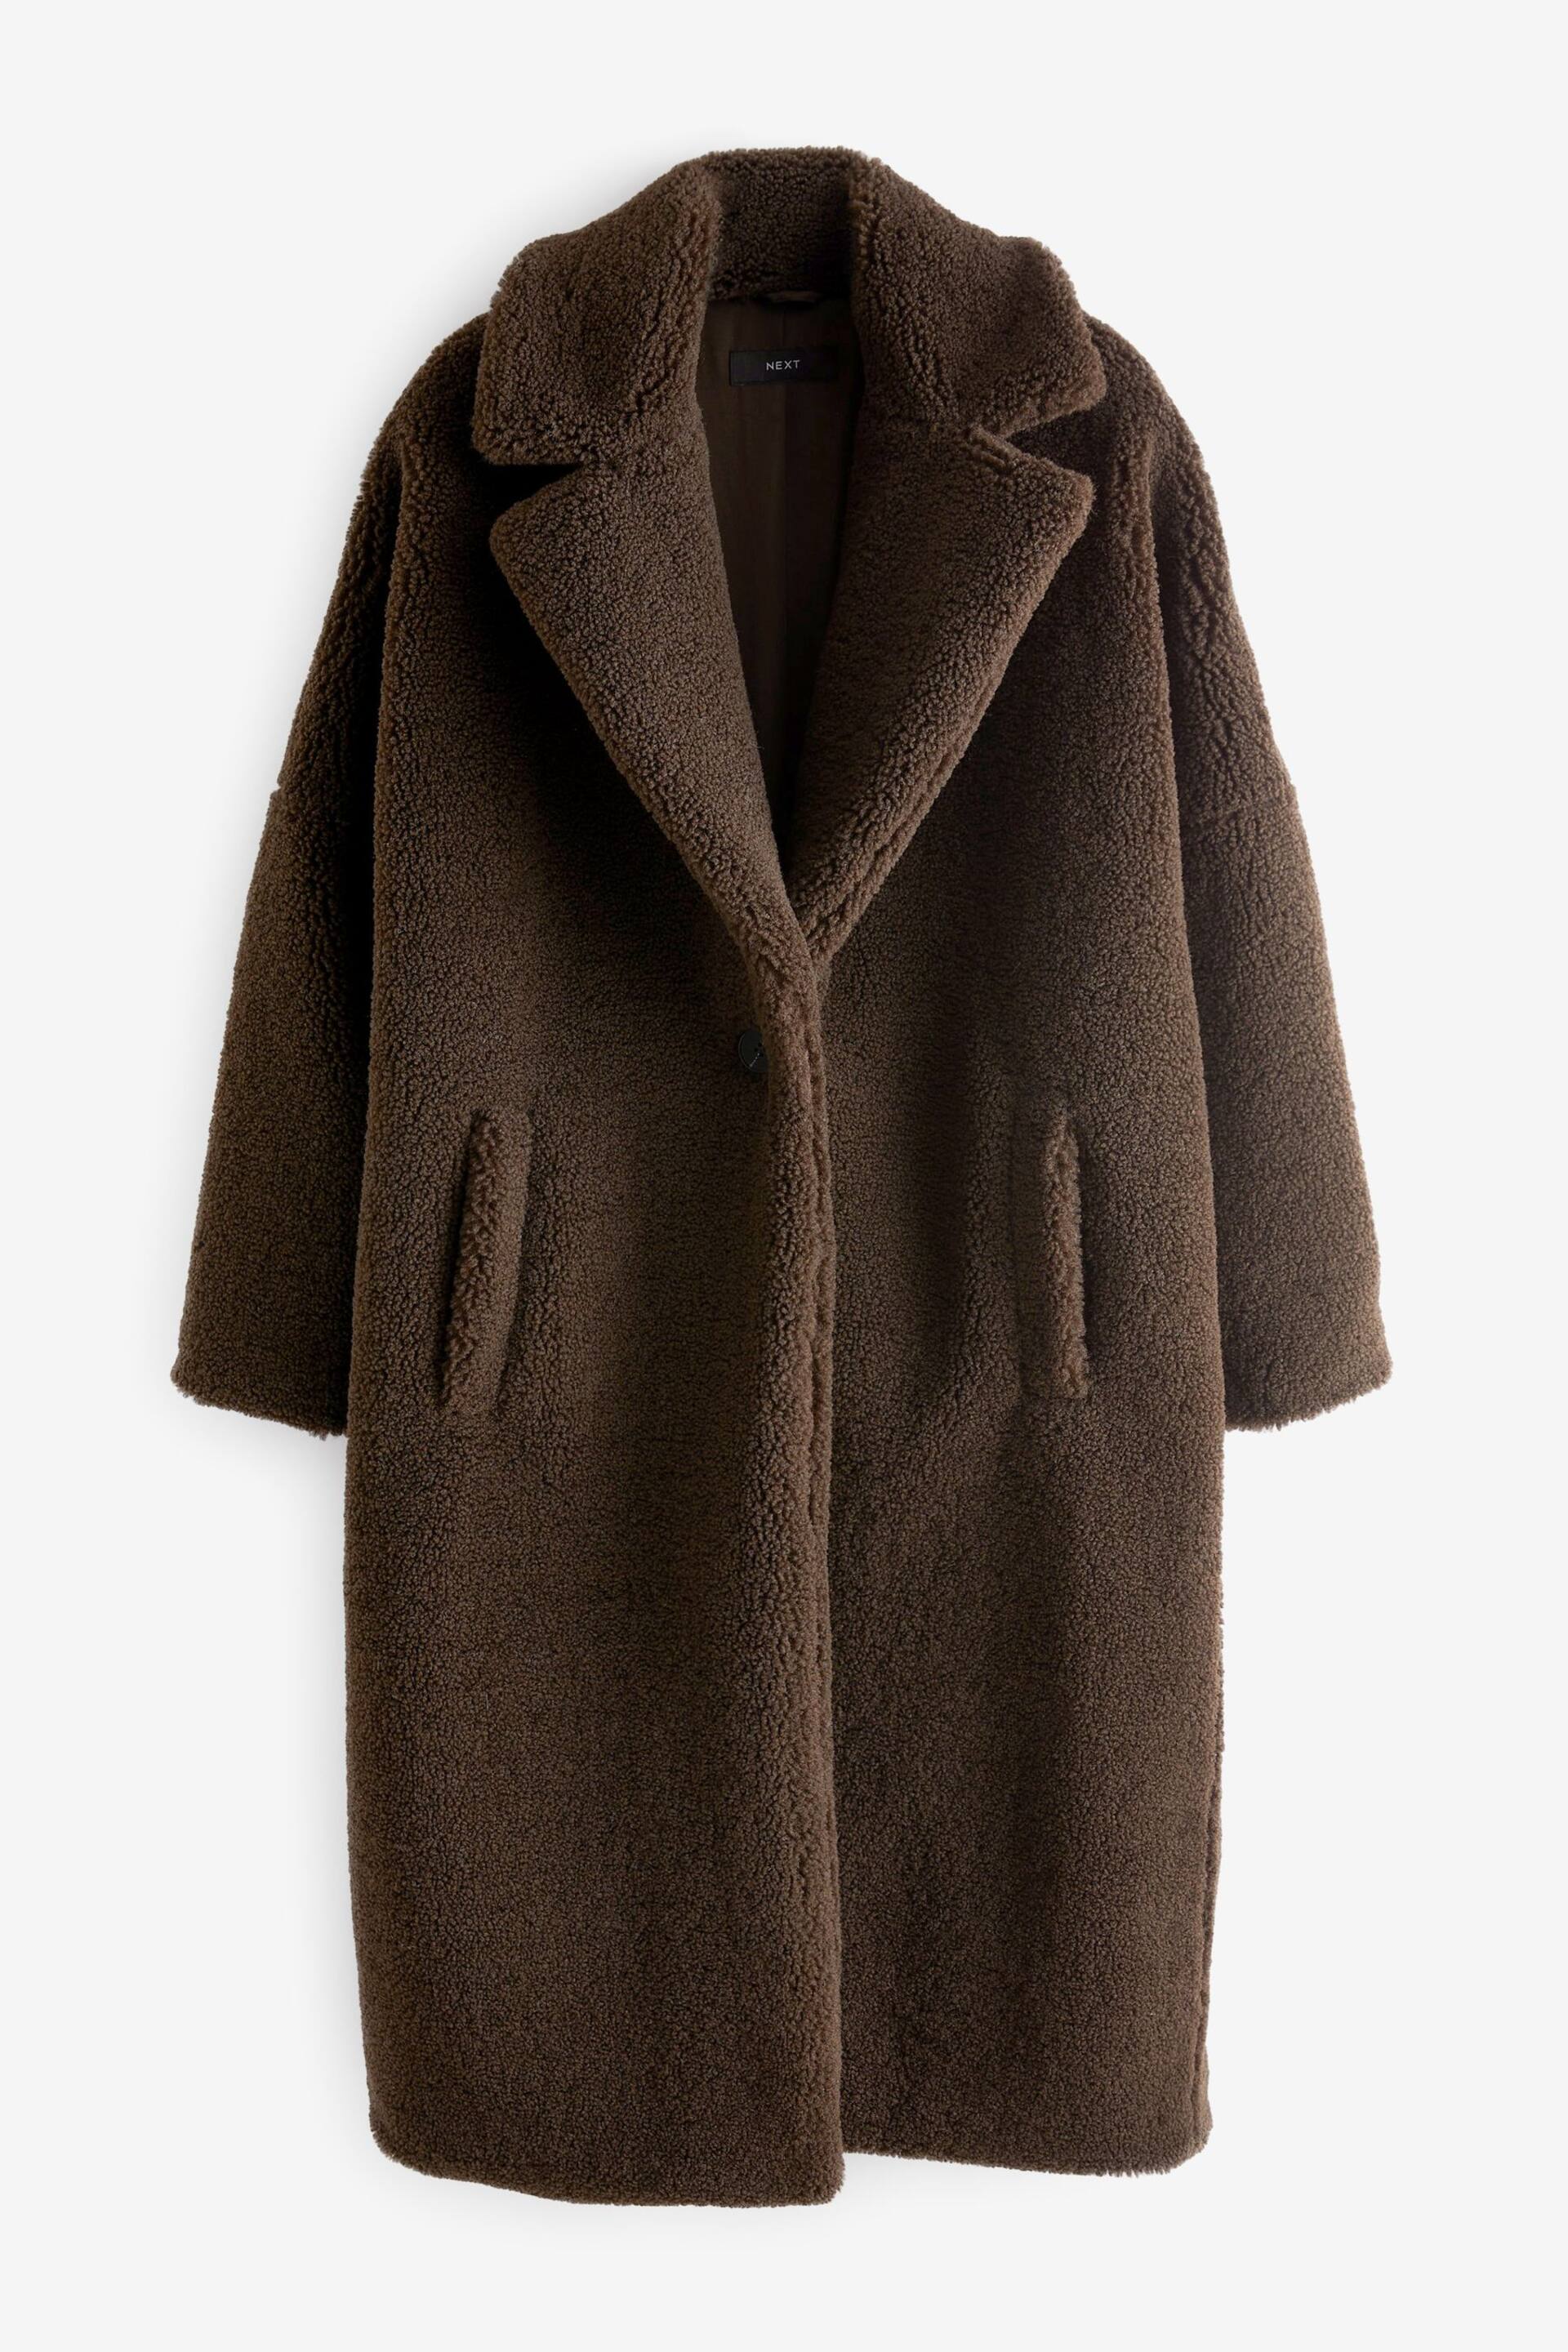 Brown Teddy Borg Long Coat - Image 5 of 6